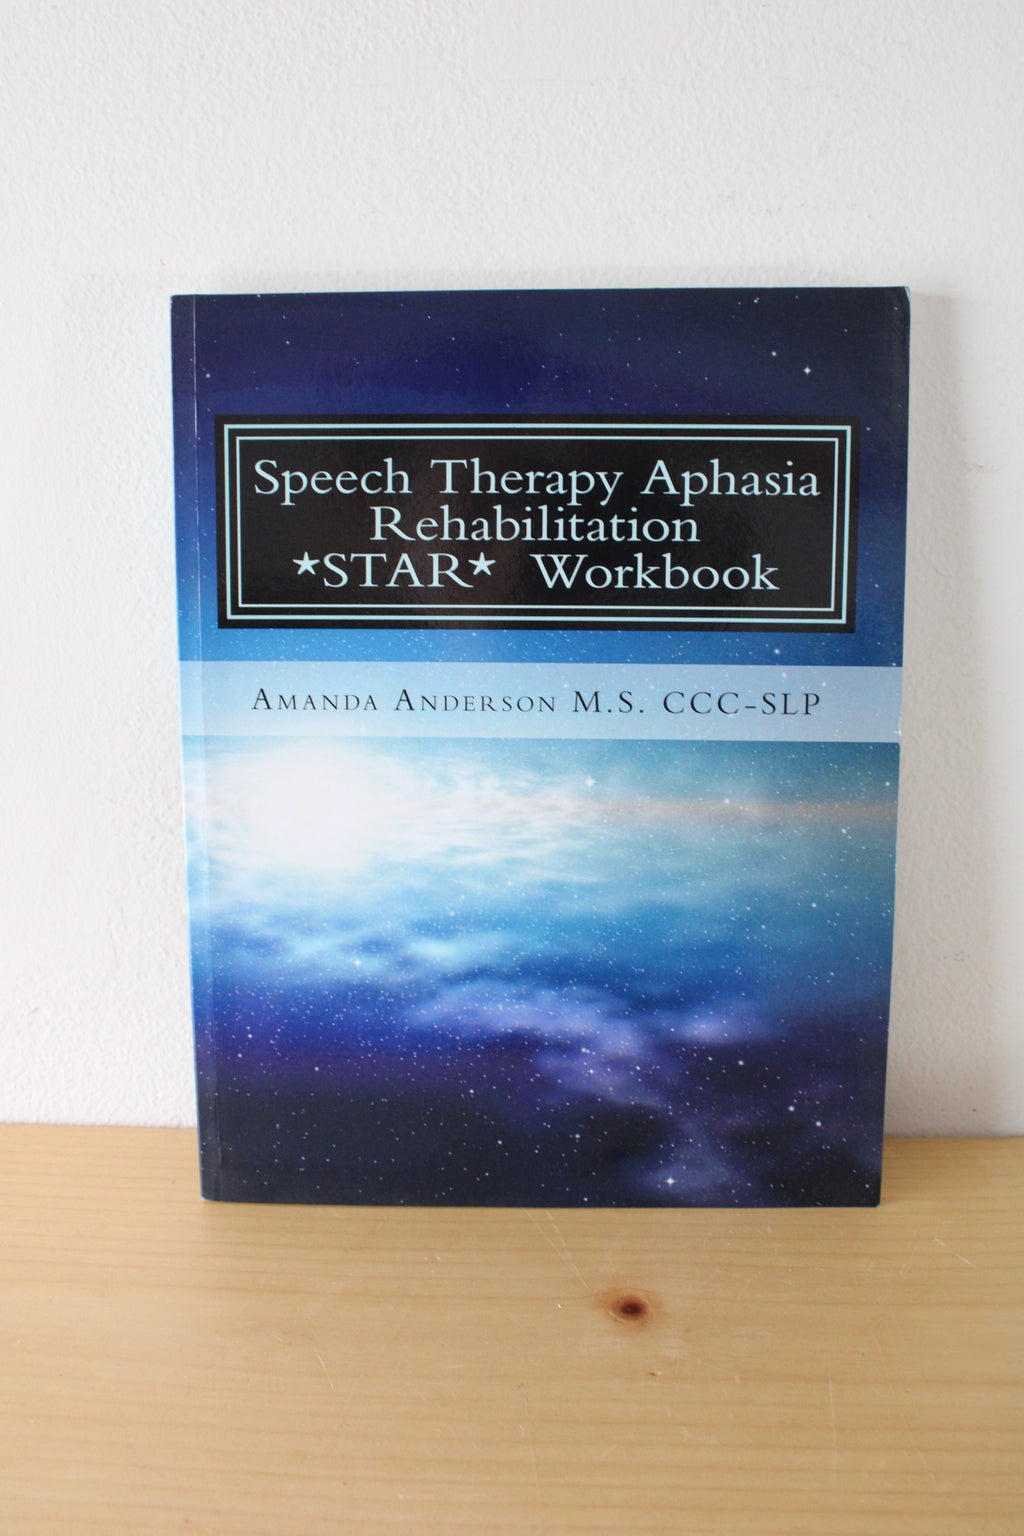 Speech Therapy Aphasia Rehabilitation STAR Workbook